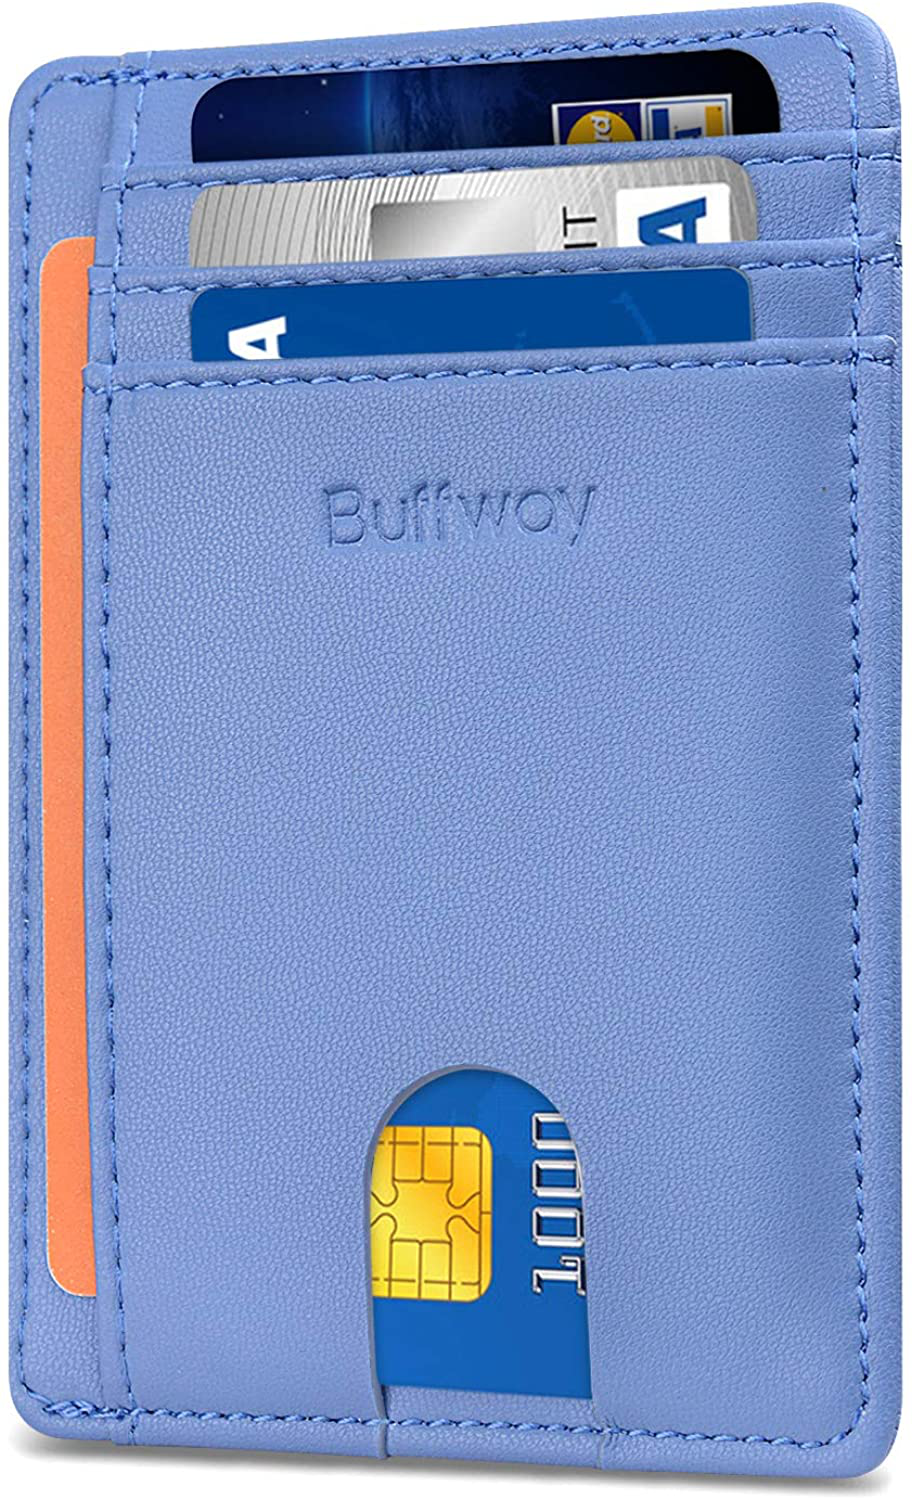 Buffway Slim Minimalist Front Pocket RFID Blocking Leather Wallets for Men Women